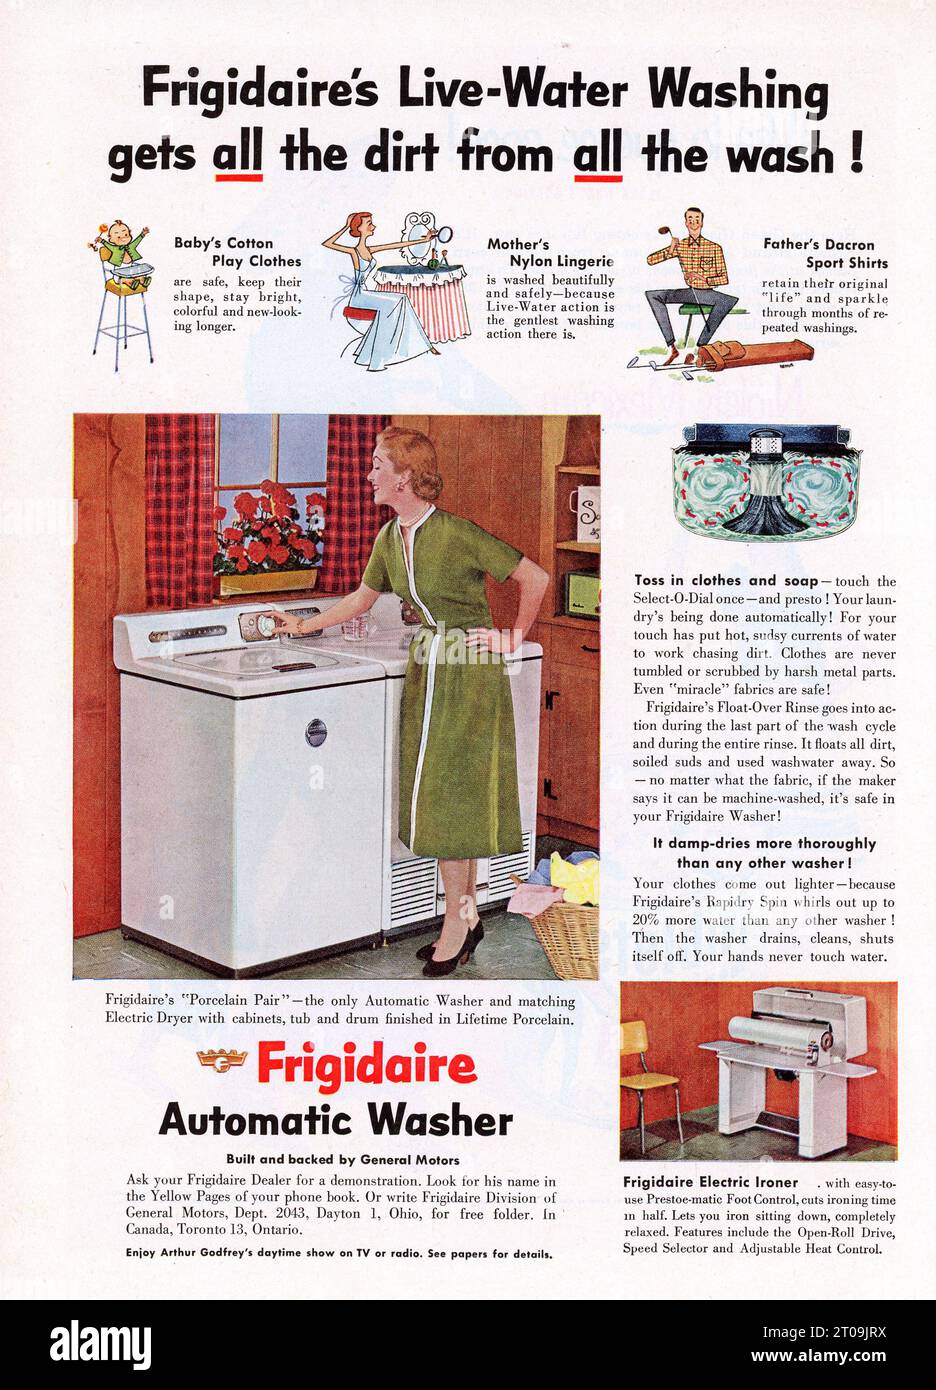 Vintage April 1953 'Good Housekeeping' Magazine Issue Advert, USA Stock Photo